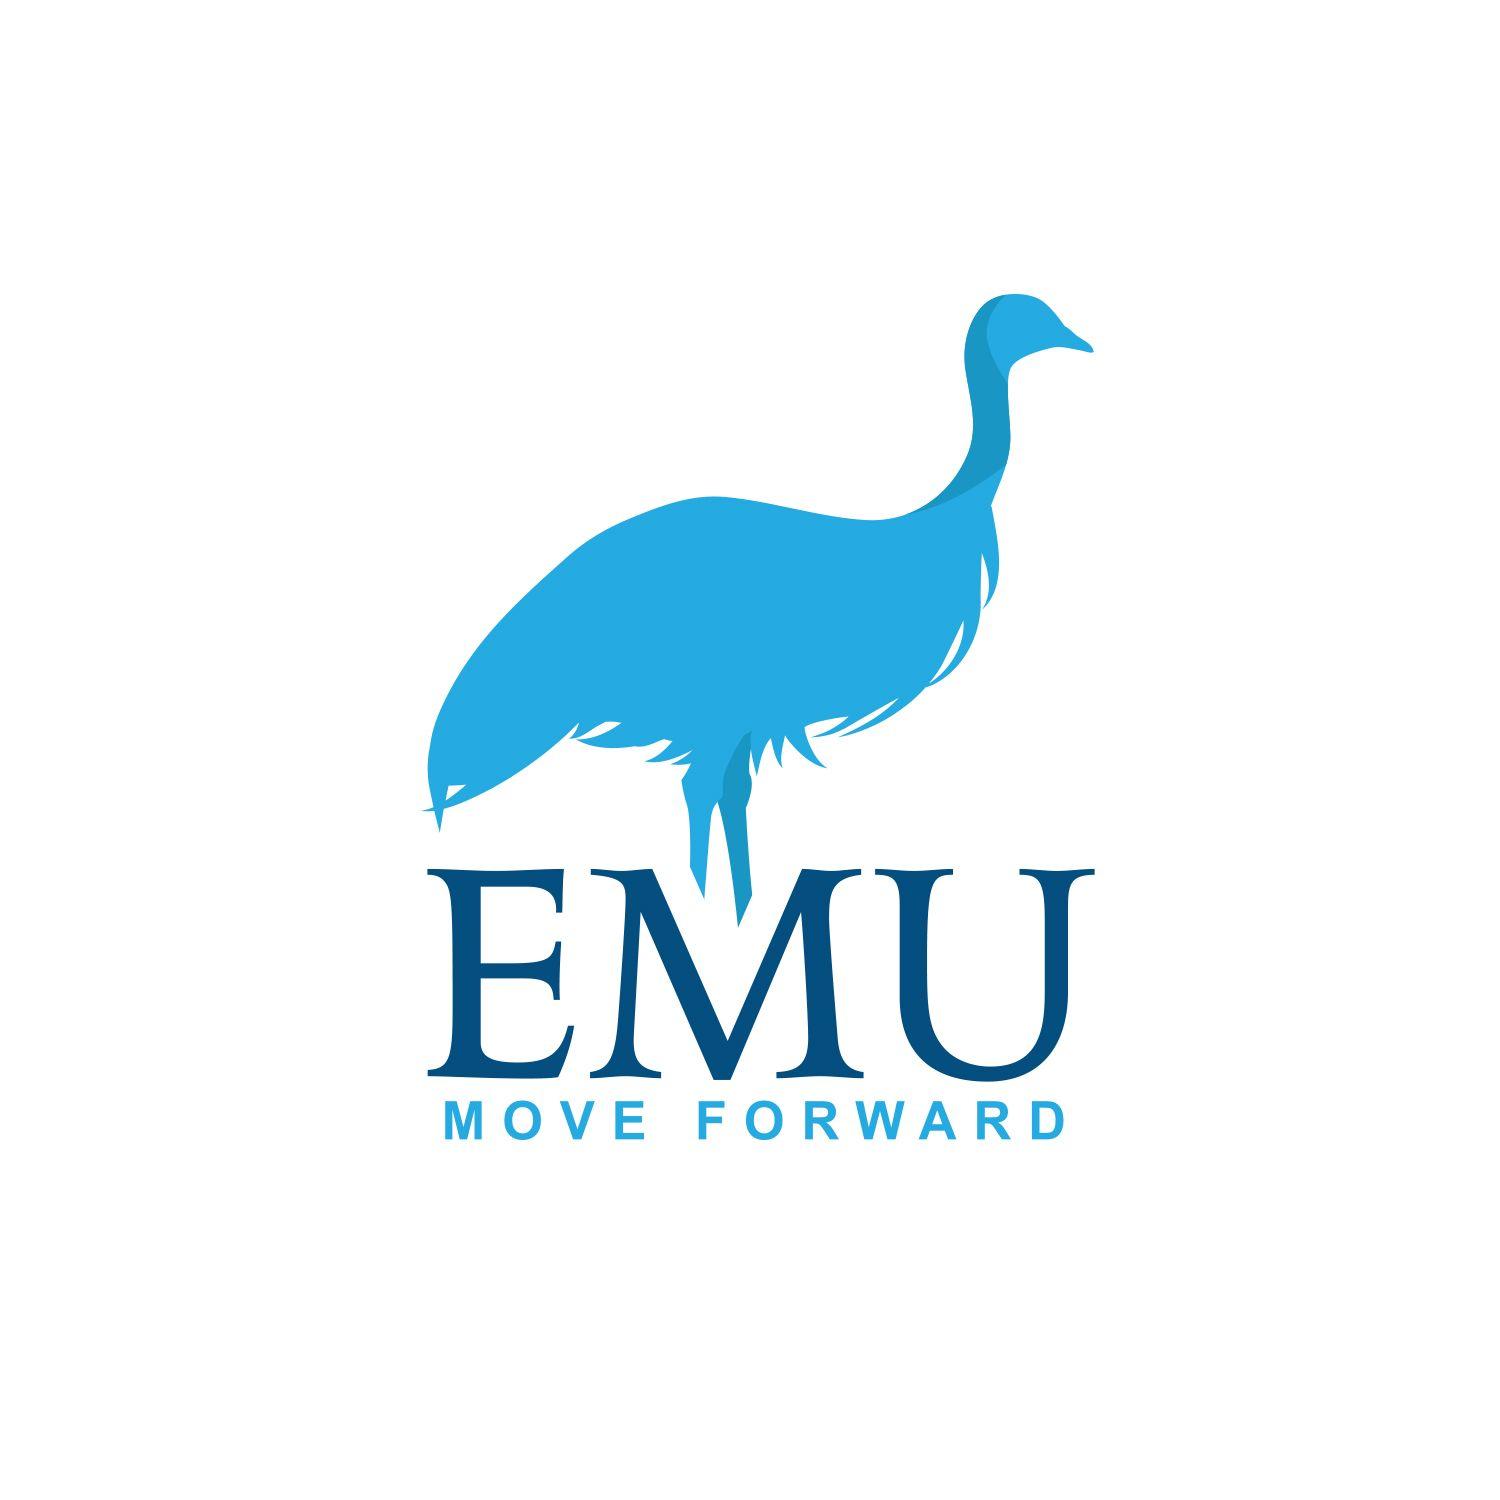 Emu Logo - Business Logo Design for EMU by Darlene Munro. Design